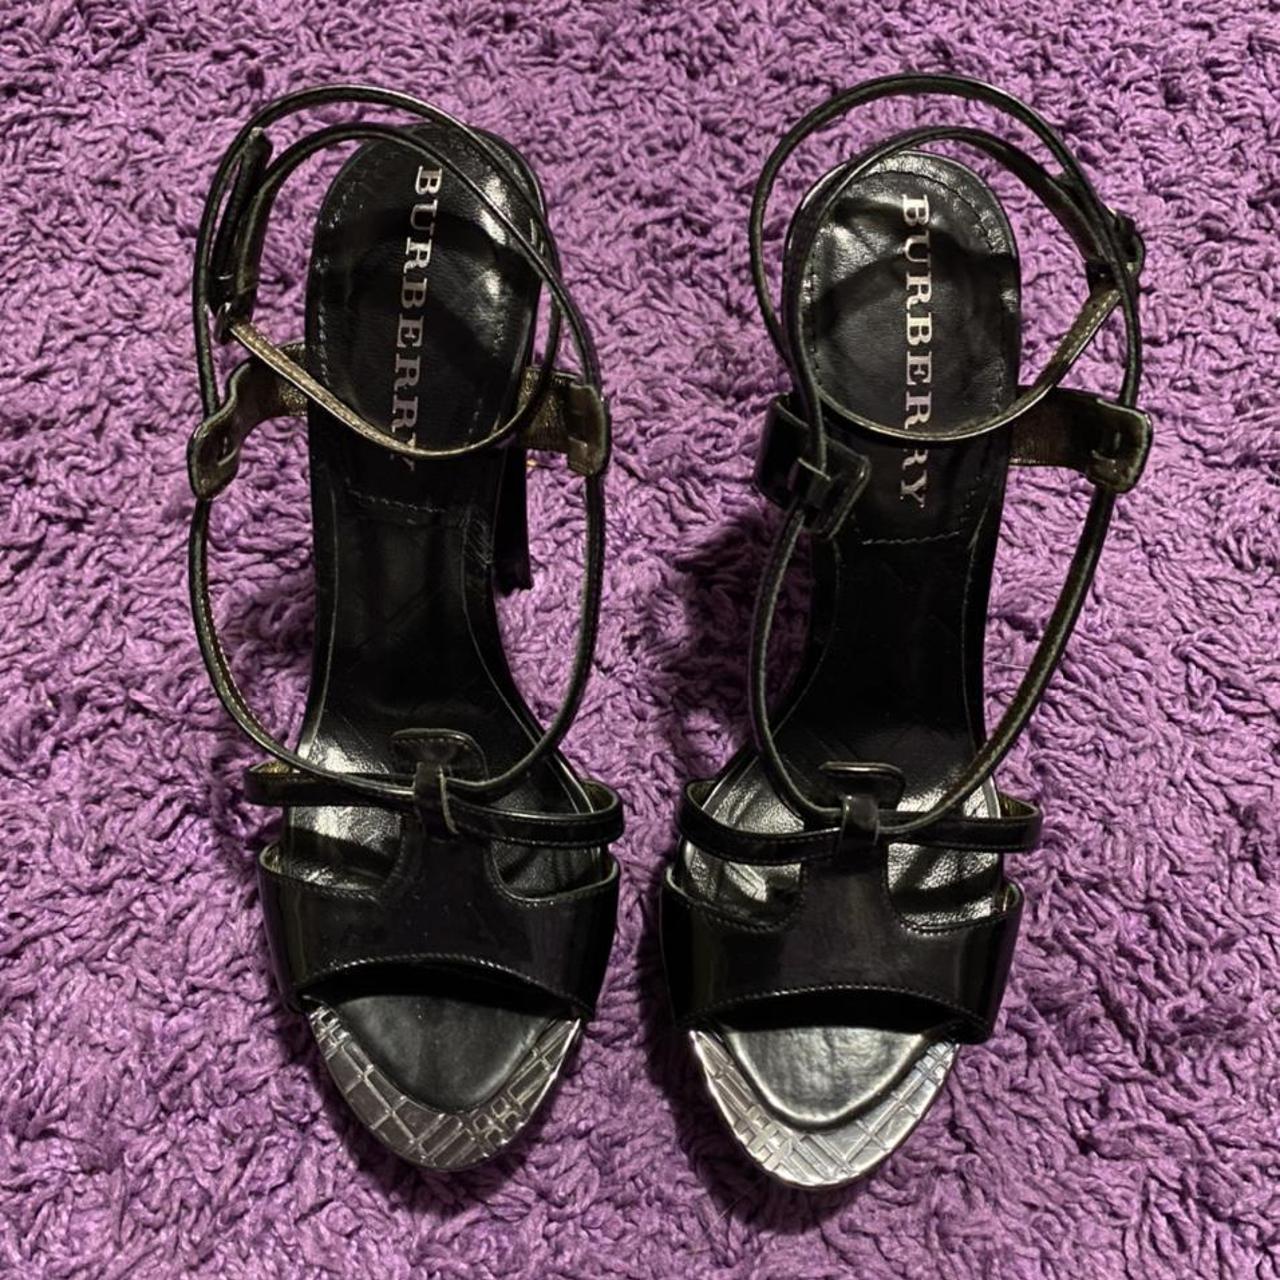 Product Image 3 - Burberry Stiletto Open Toe Sandals
Color: